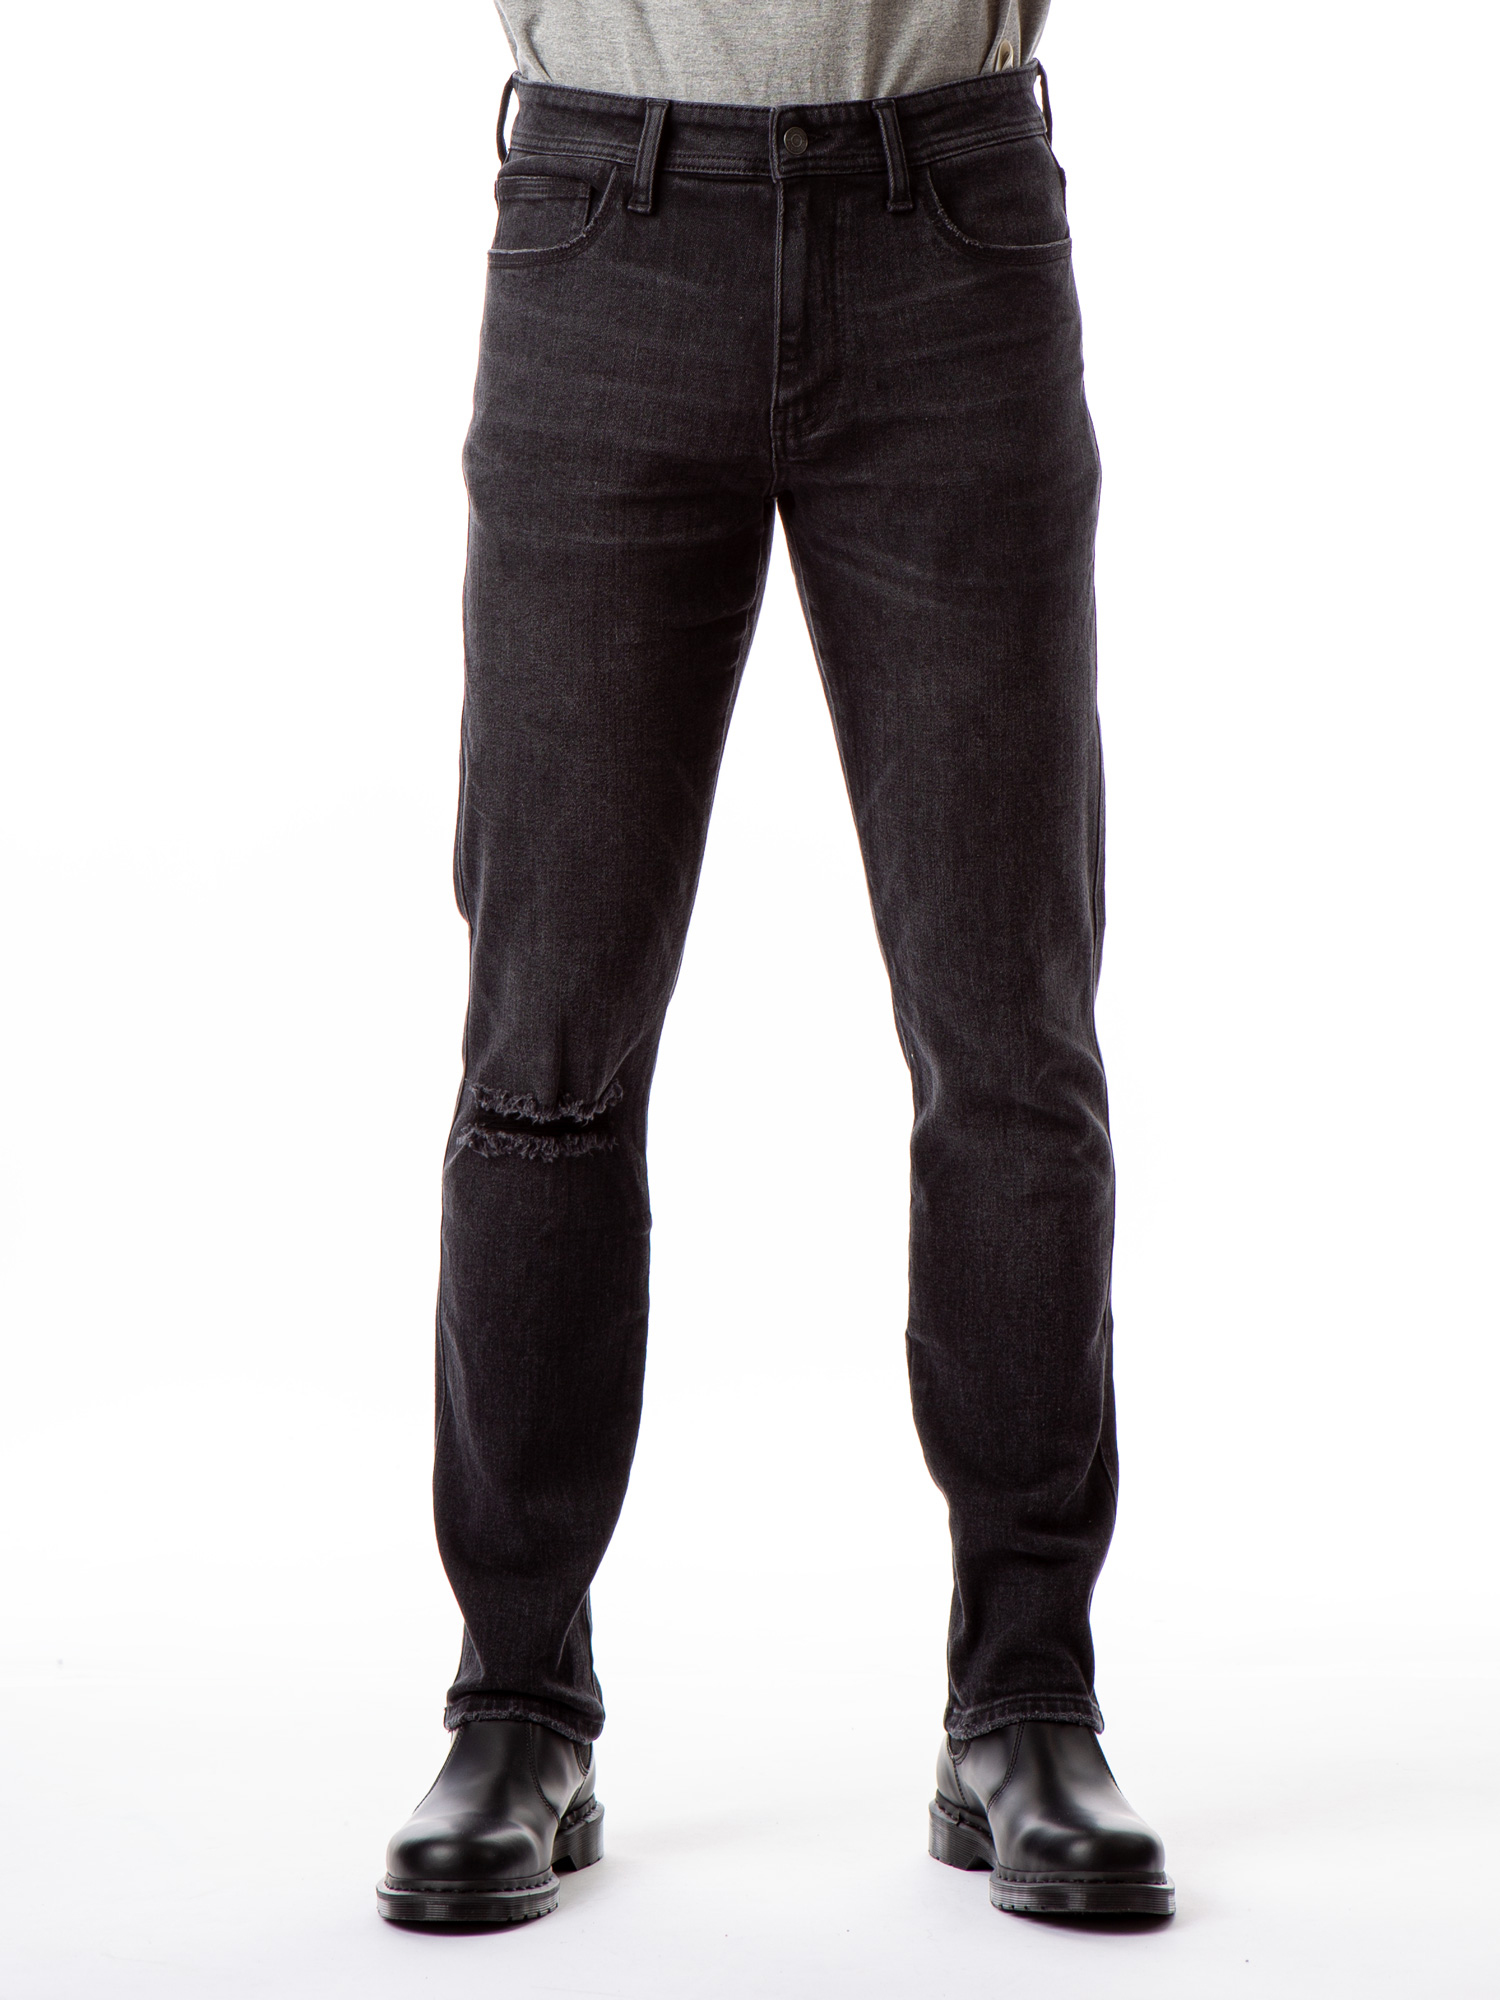 Jordache Vintage Men's Brad Athletic Slim Jeans - image 1 of 6